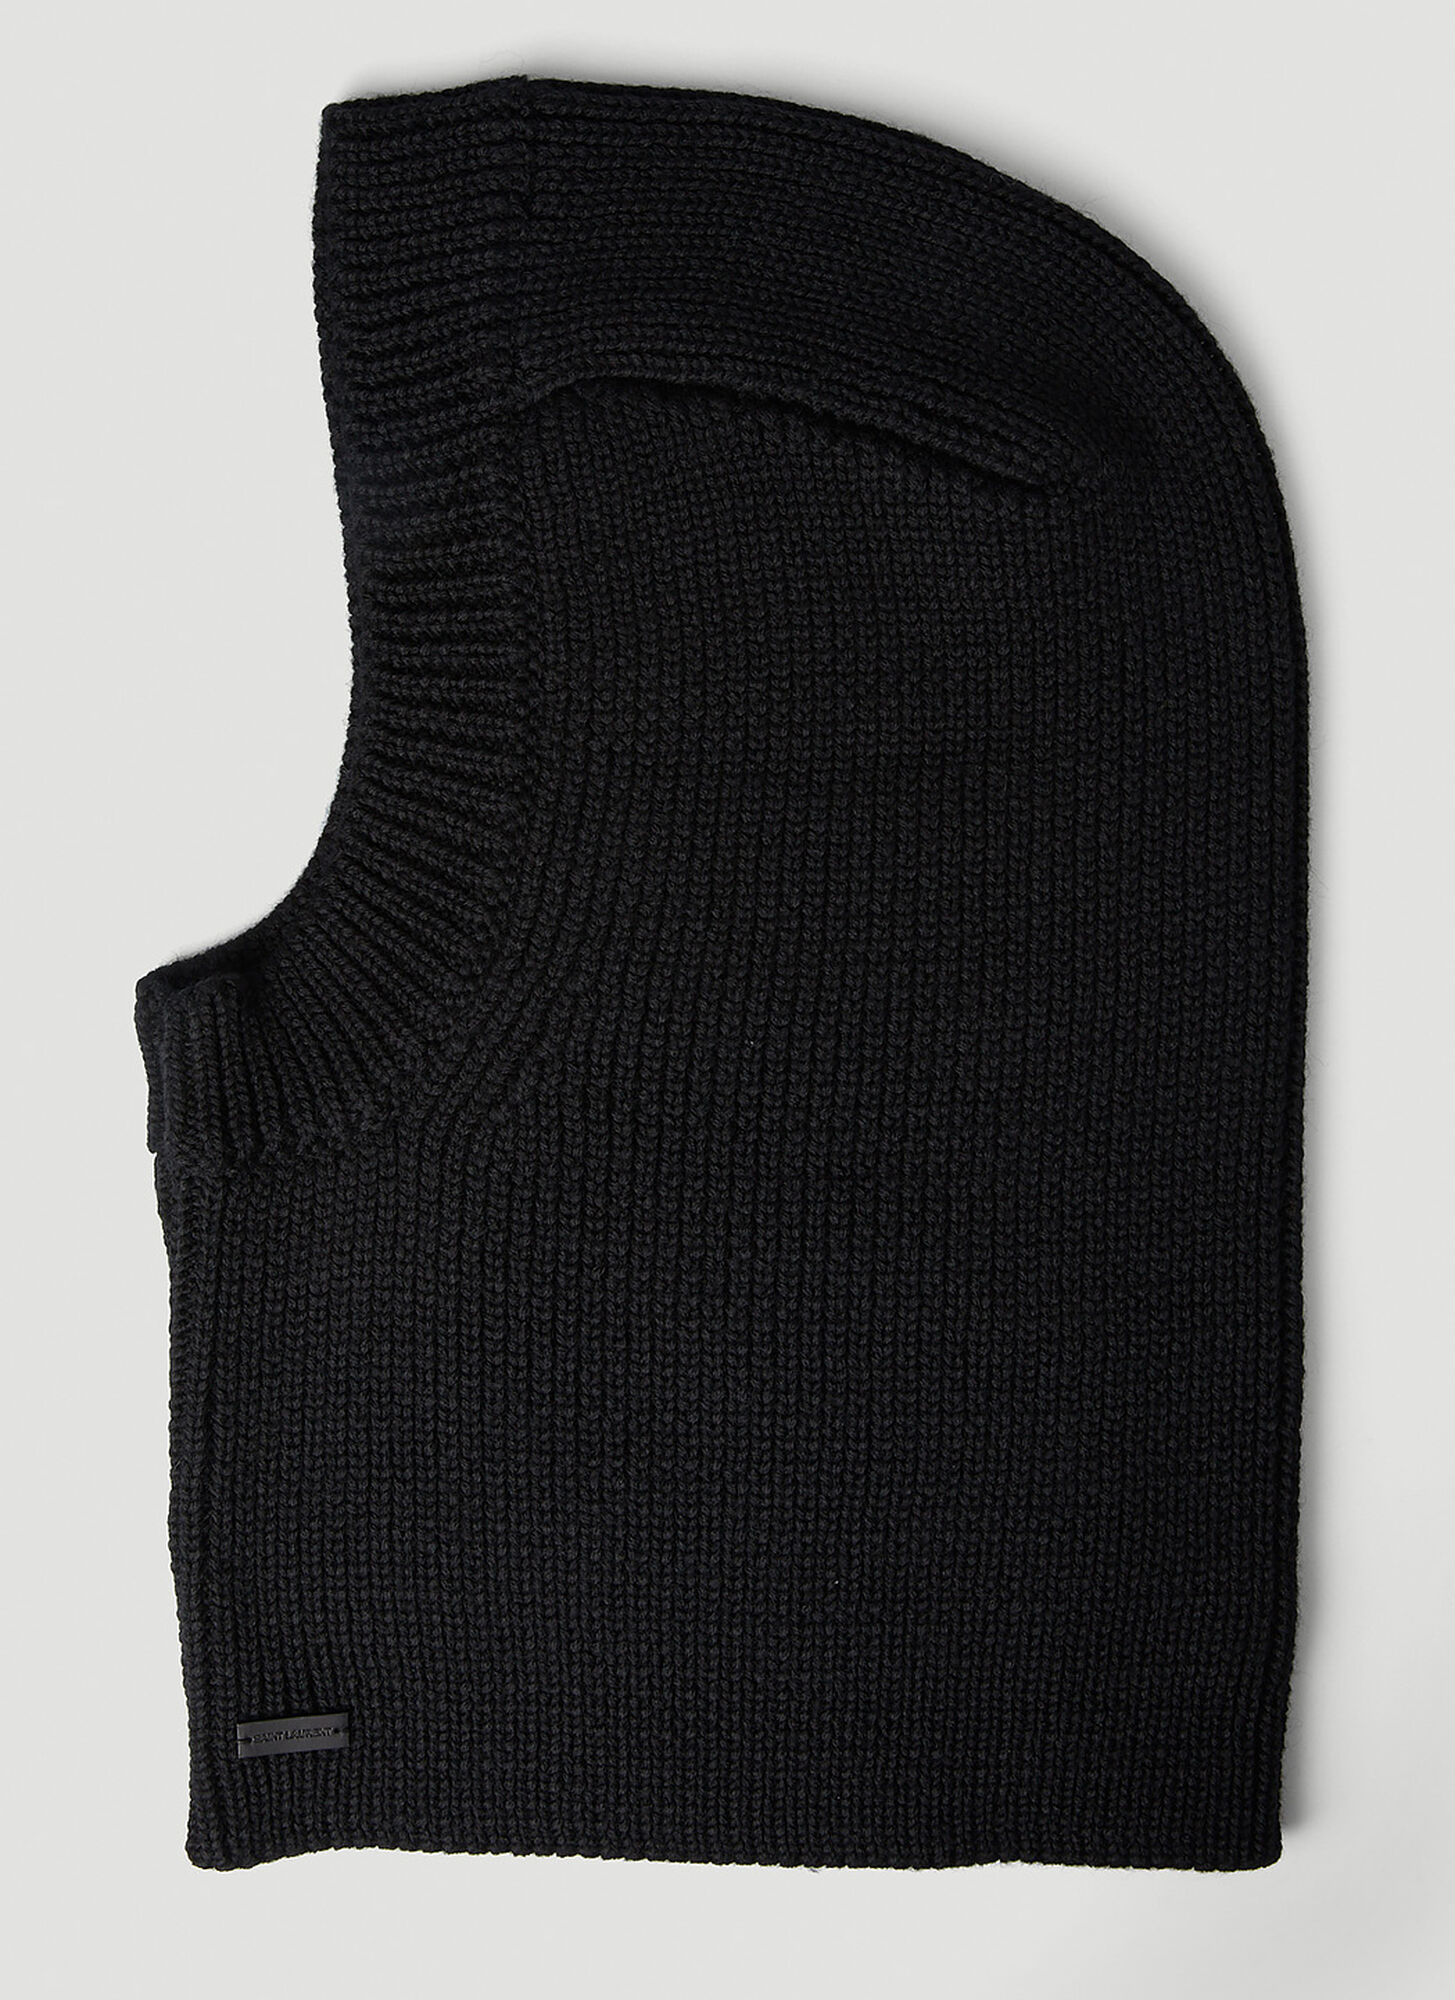 Saint Laurent Knitted Balaclava Male Black